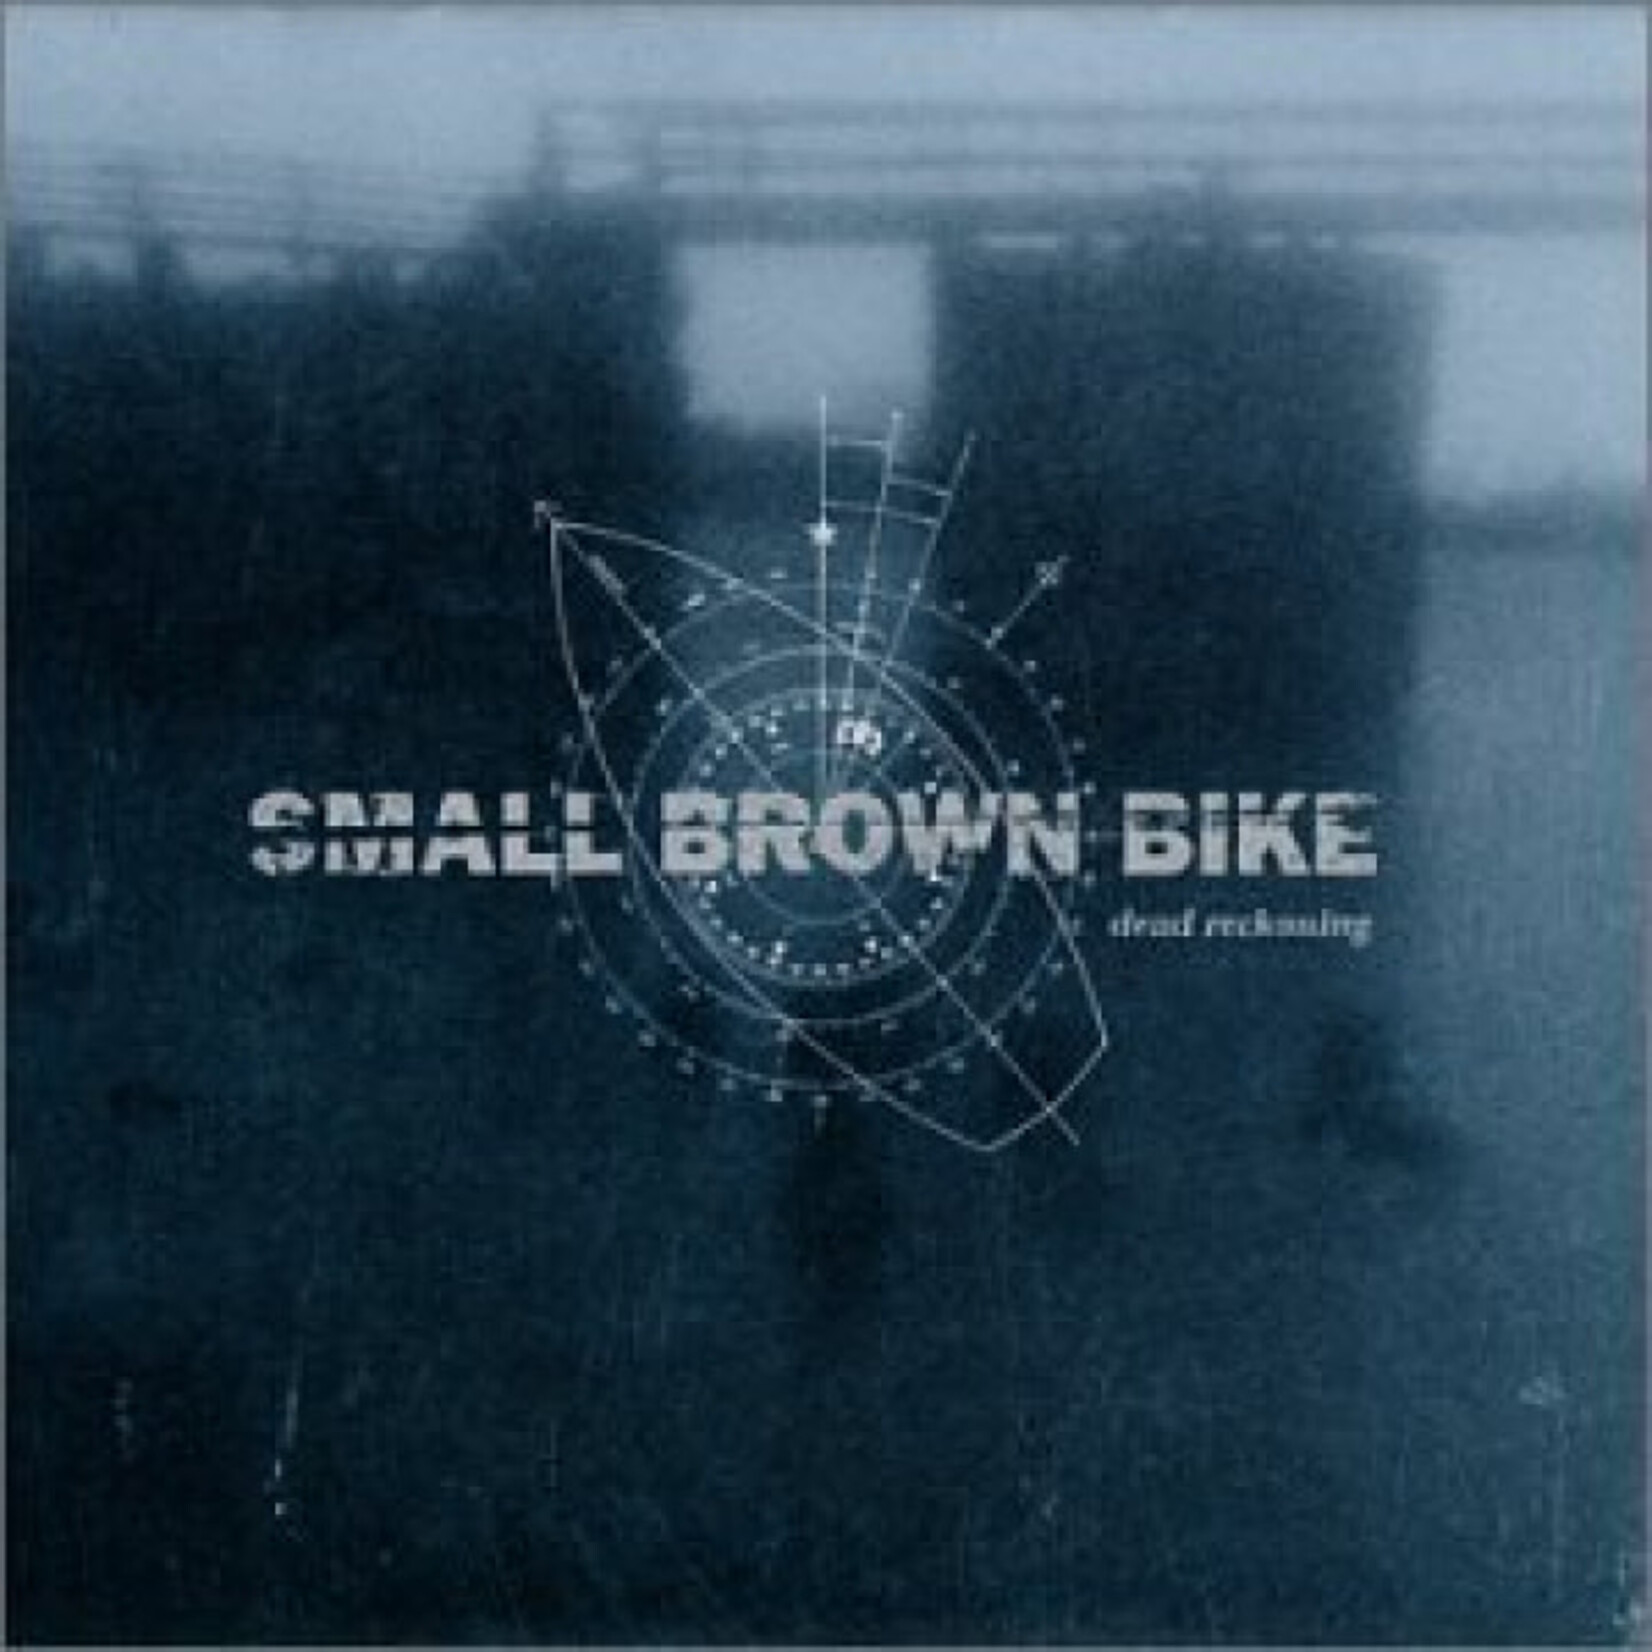 PRE-ORDER Small Brown Bike - Dead Reckoning (LP)